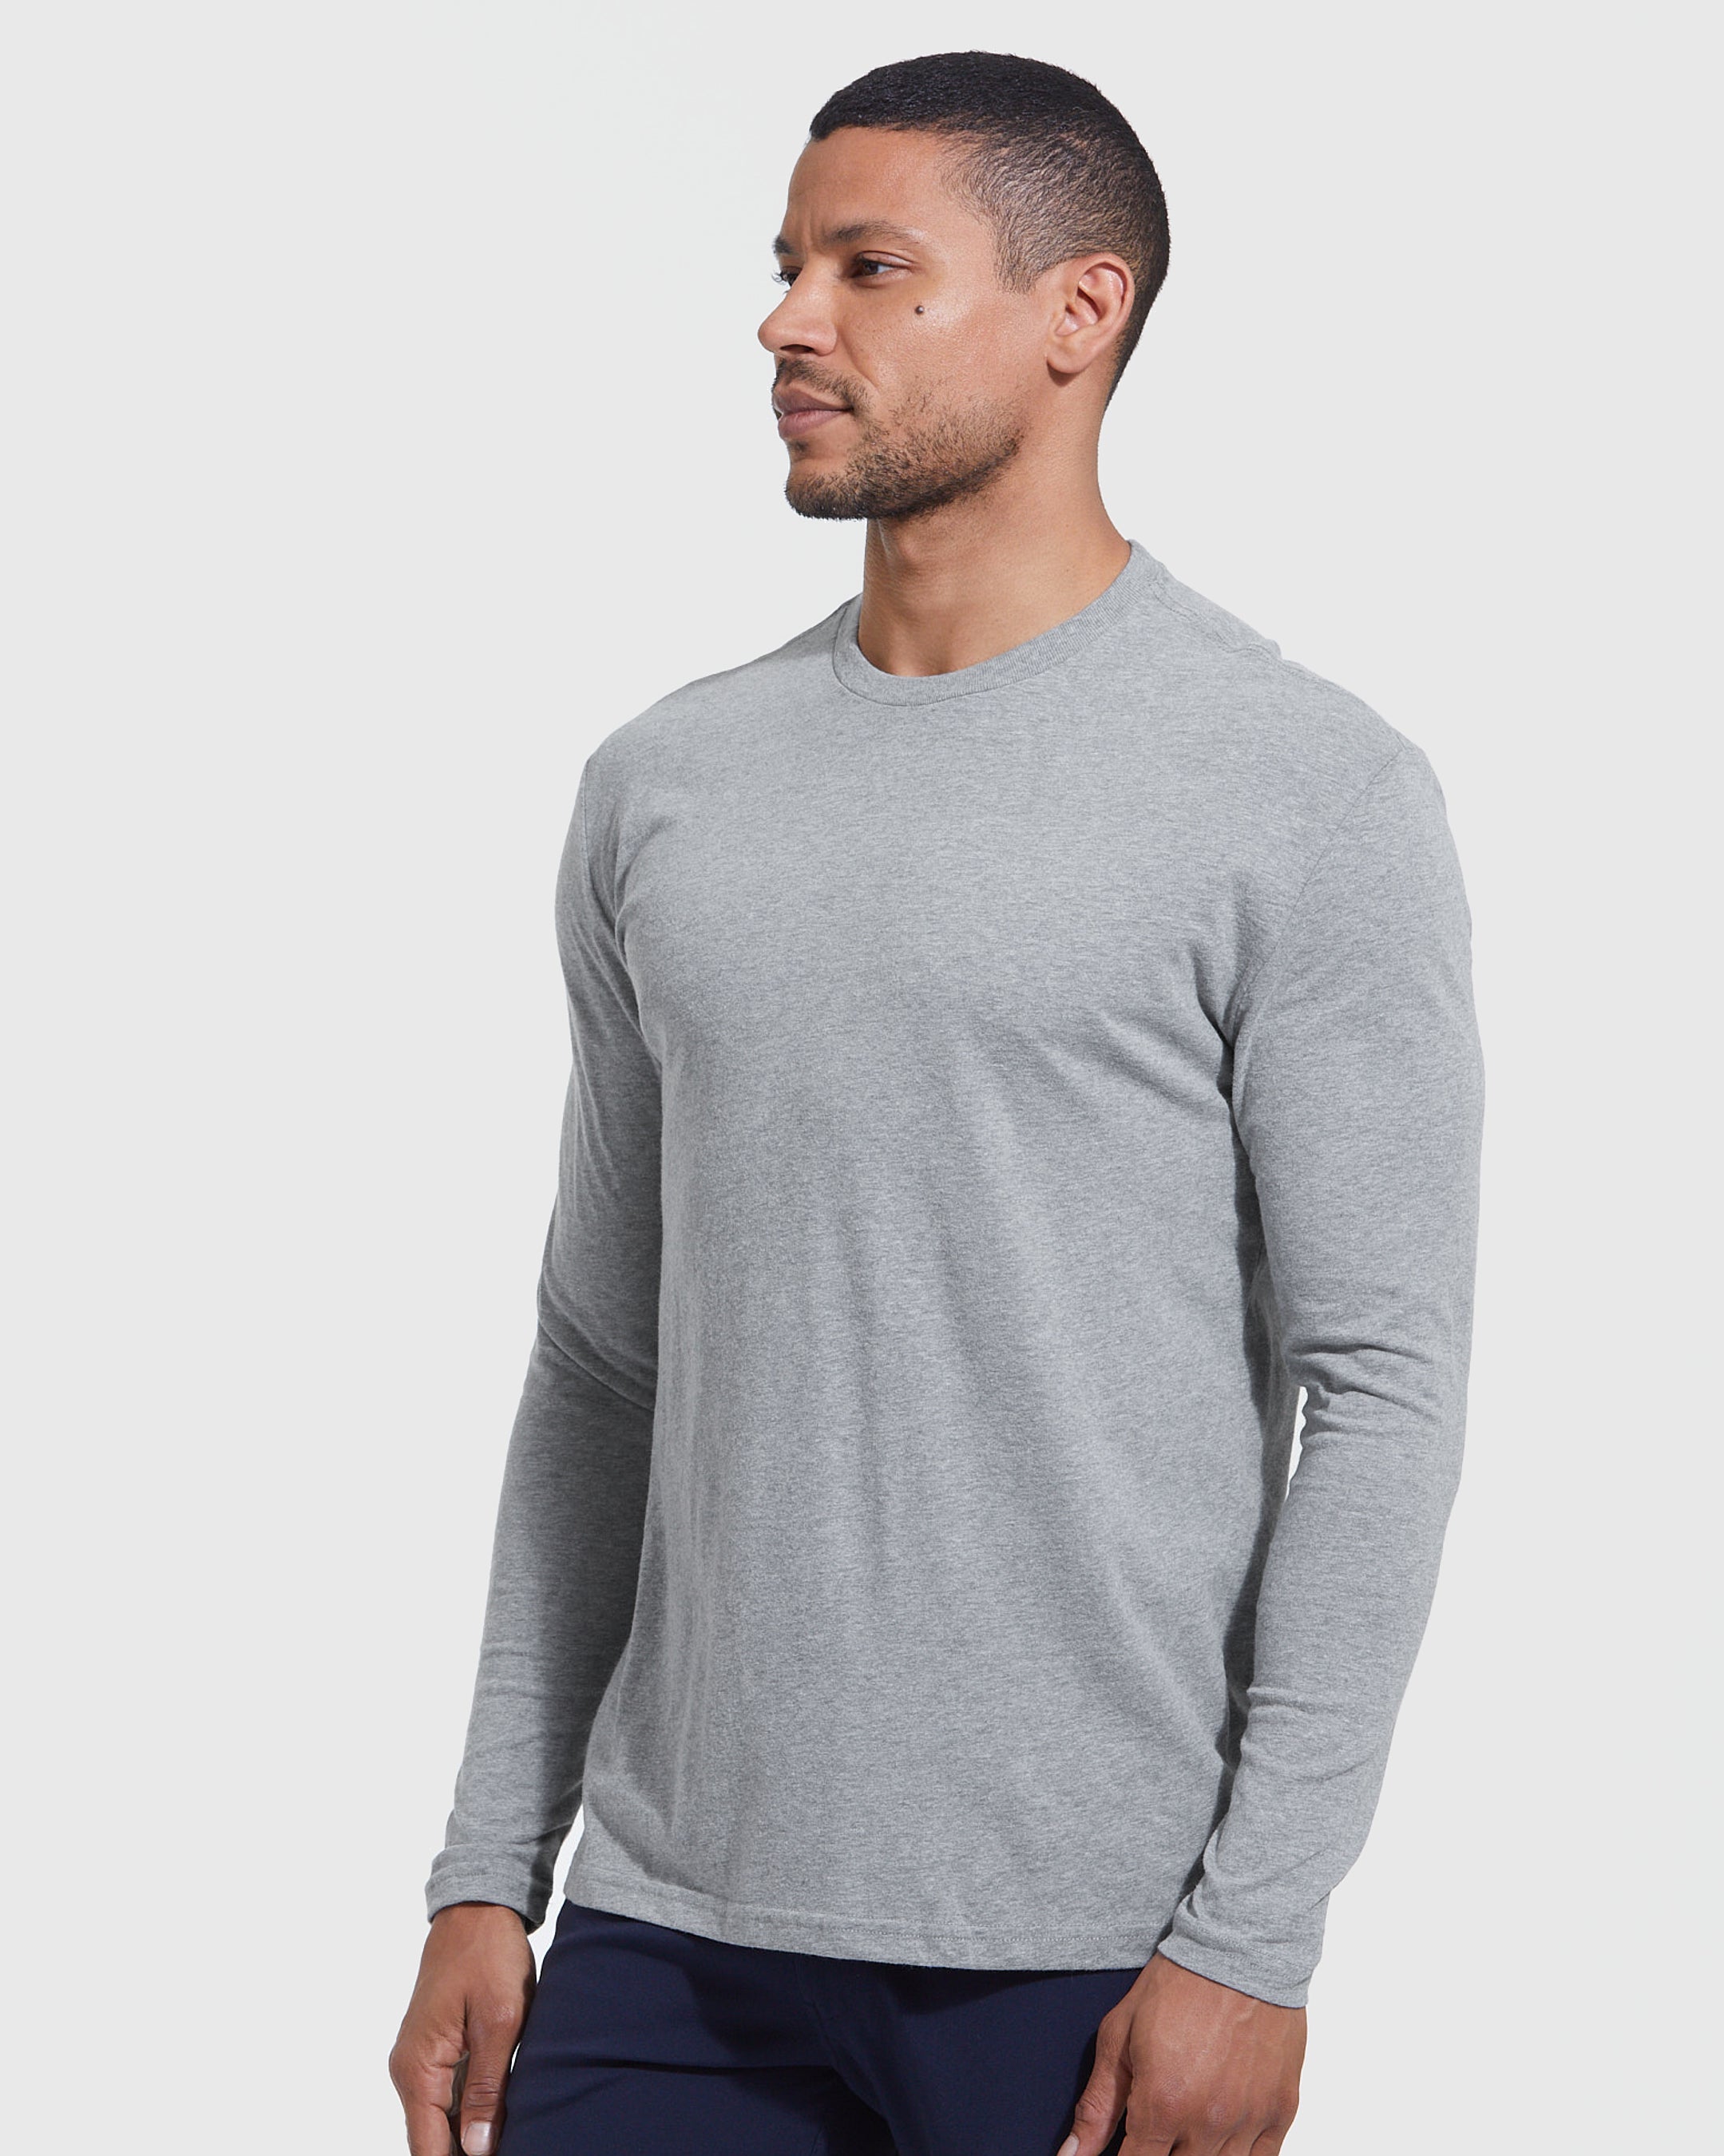 Buy Gaiam men round neck long sleeve heather t shirt grey Online